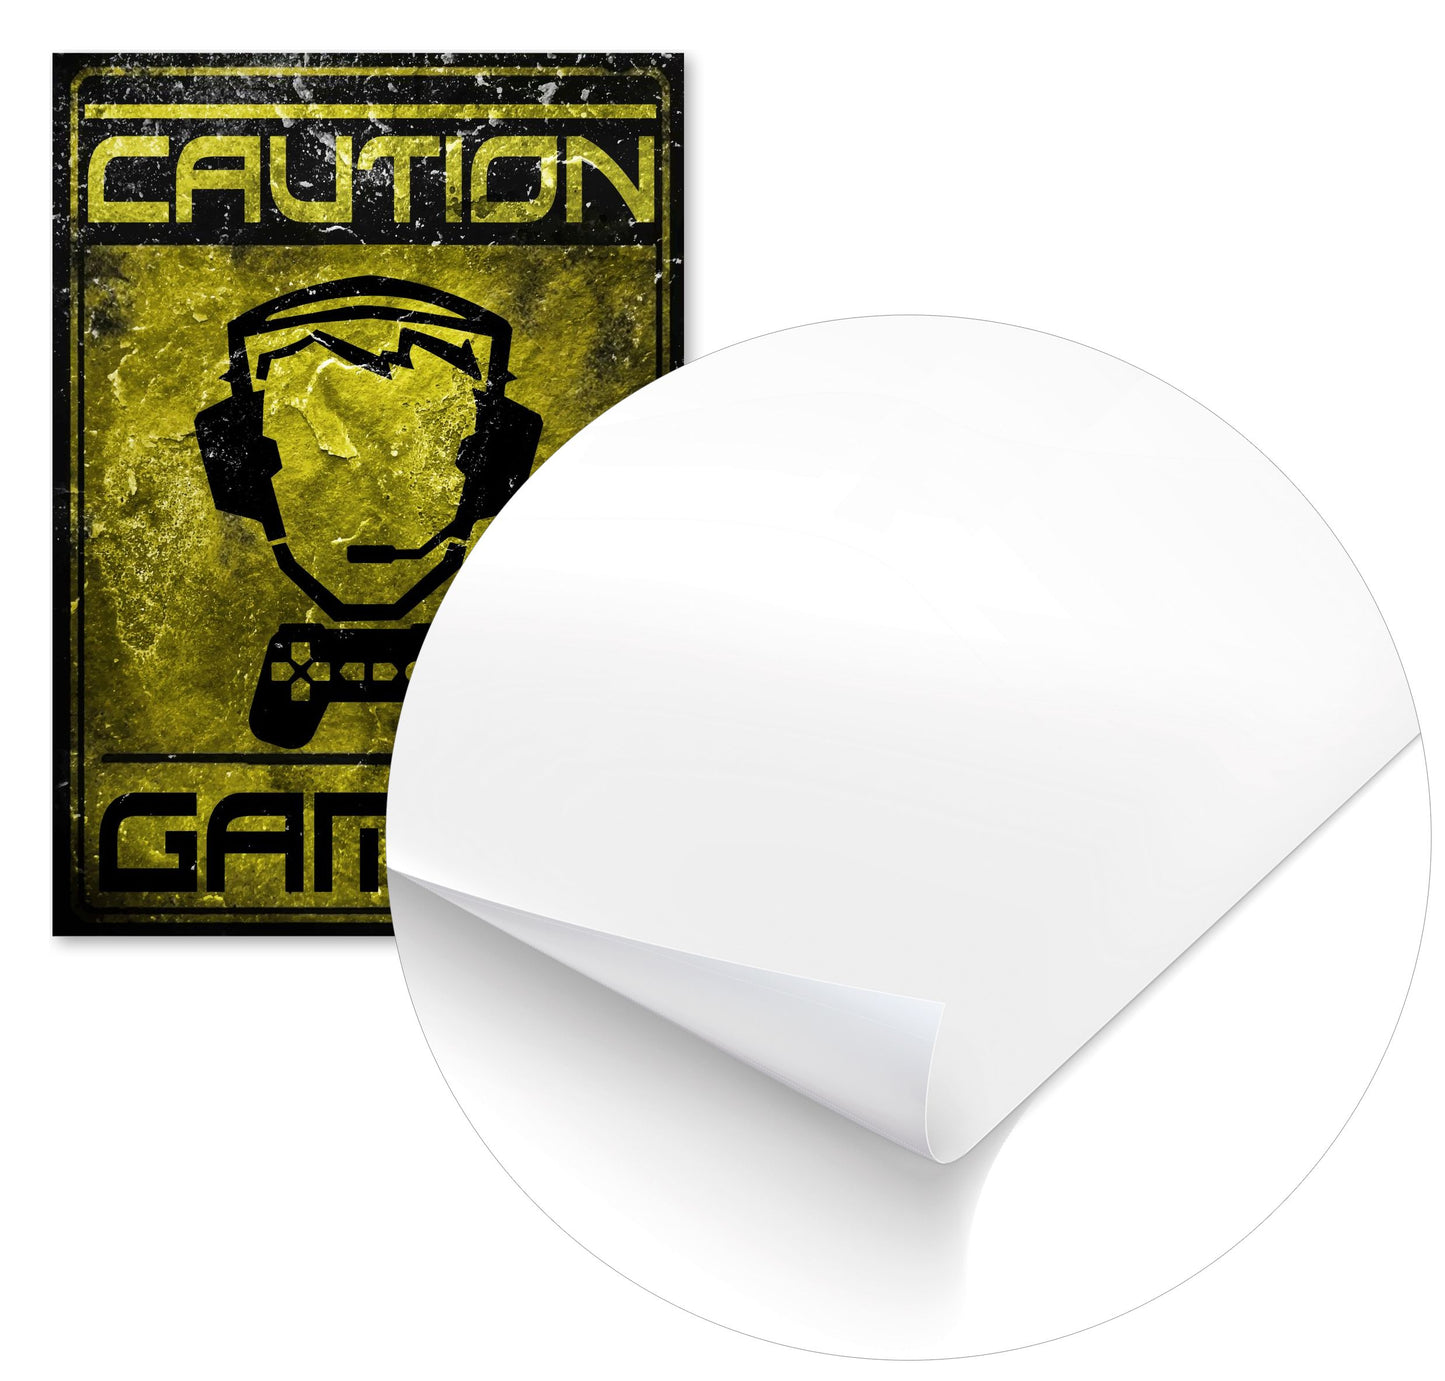 Caution gamer - @SyanArt